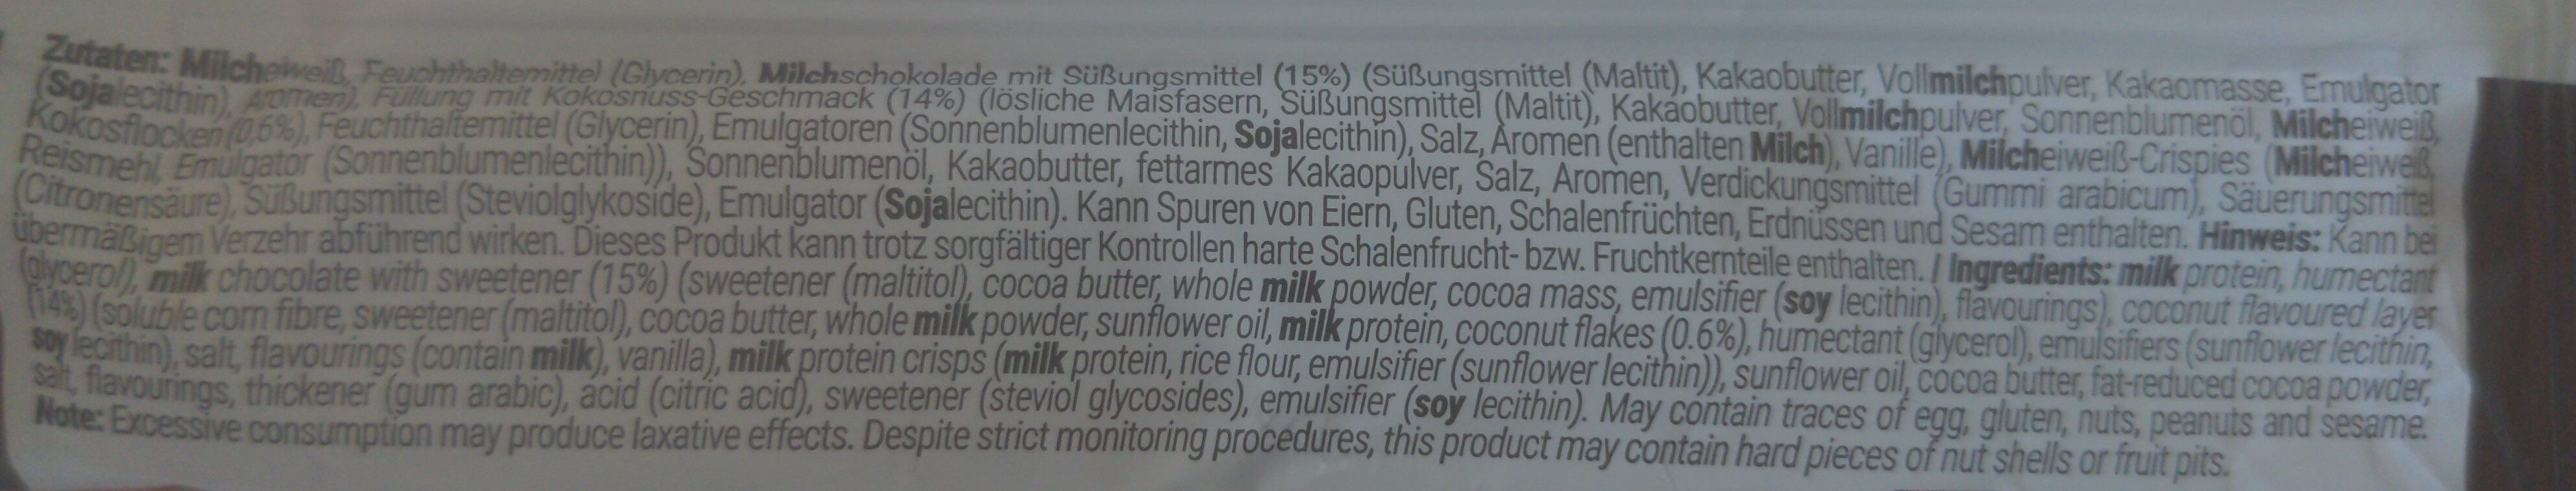 Protéine barre - Ingredients - en